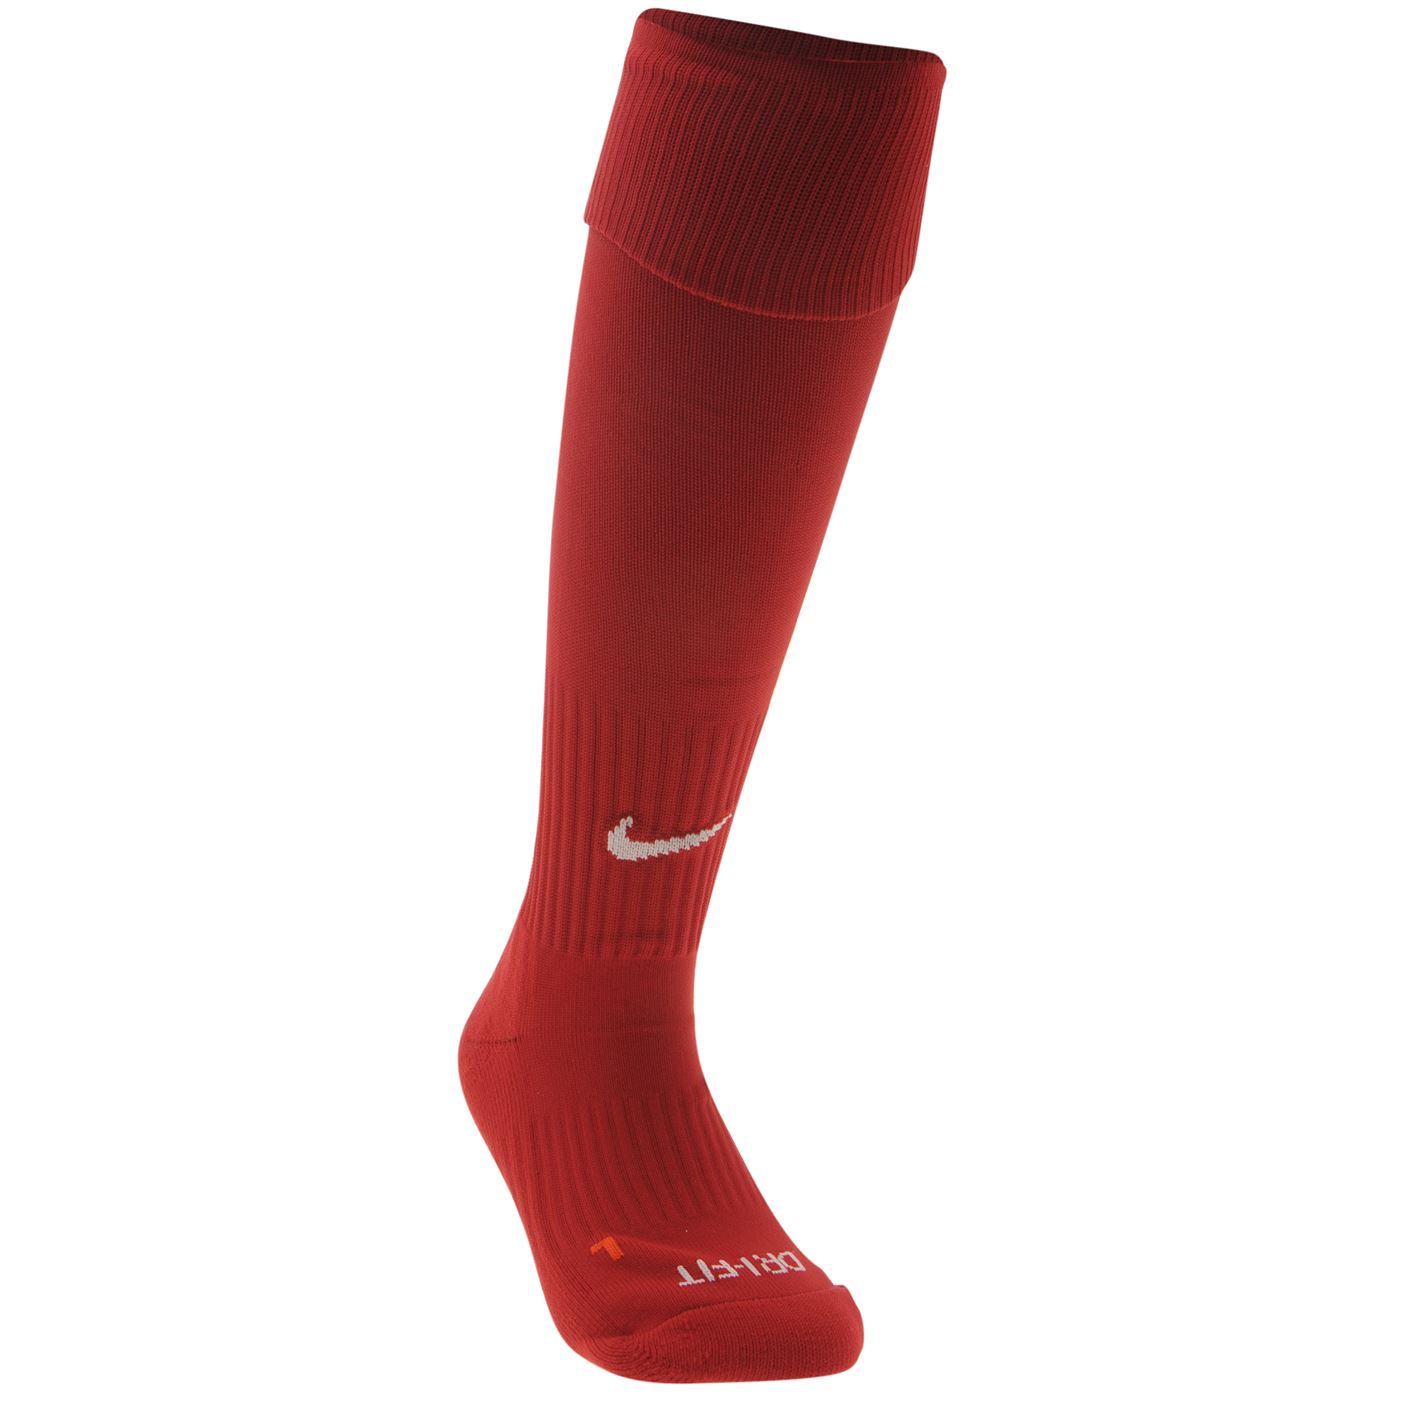 Nike Classic Football Socks Mens